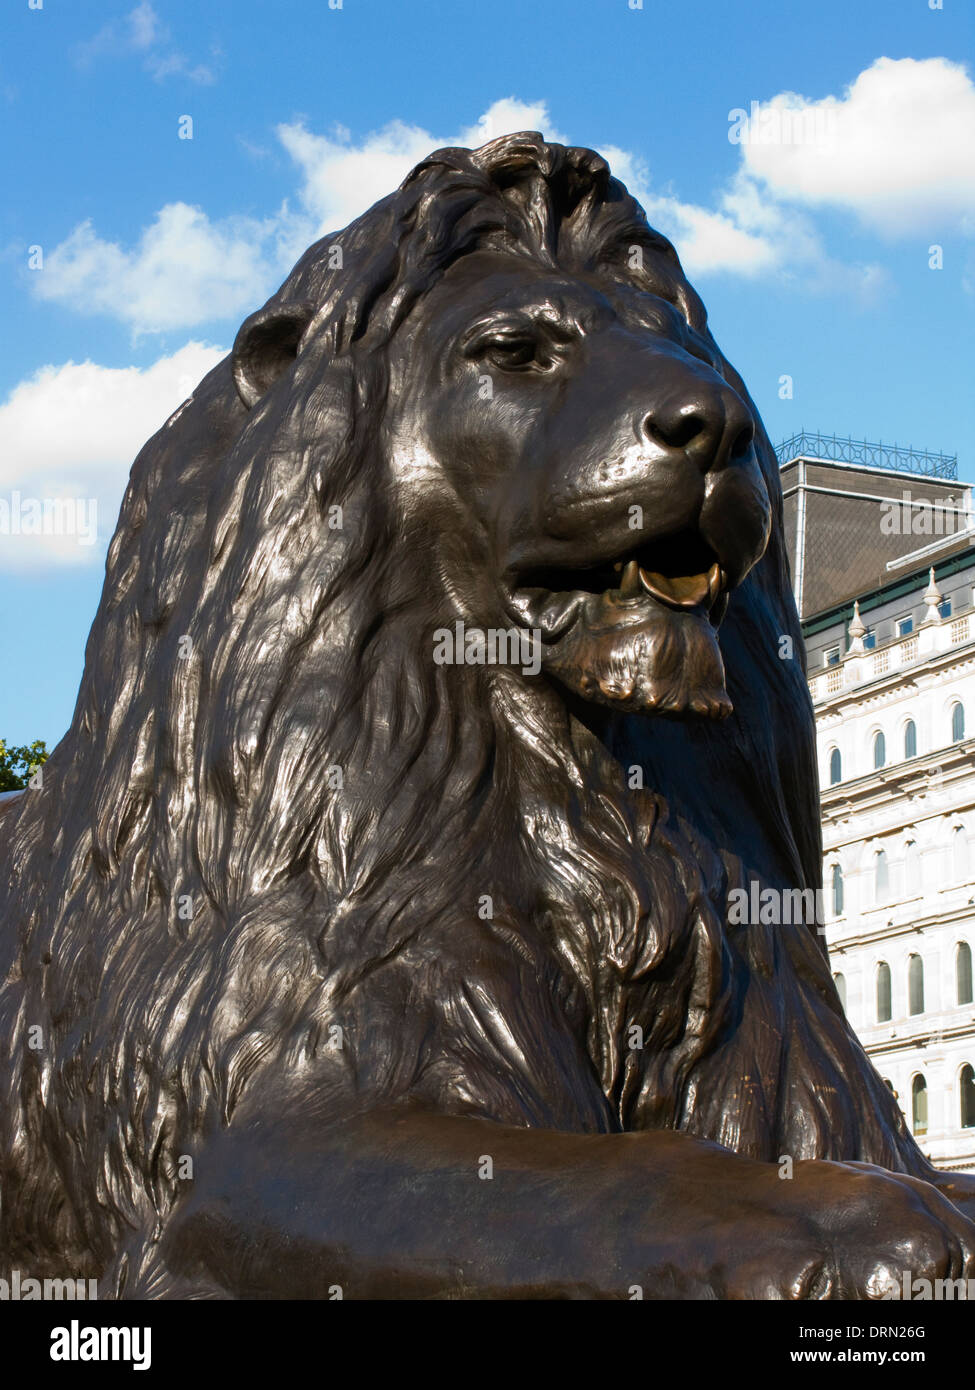 Monumental bronze lion sculpted by Sir Edwin Landseer in Trafalgar Square, London, UK Stock Photo